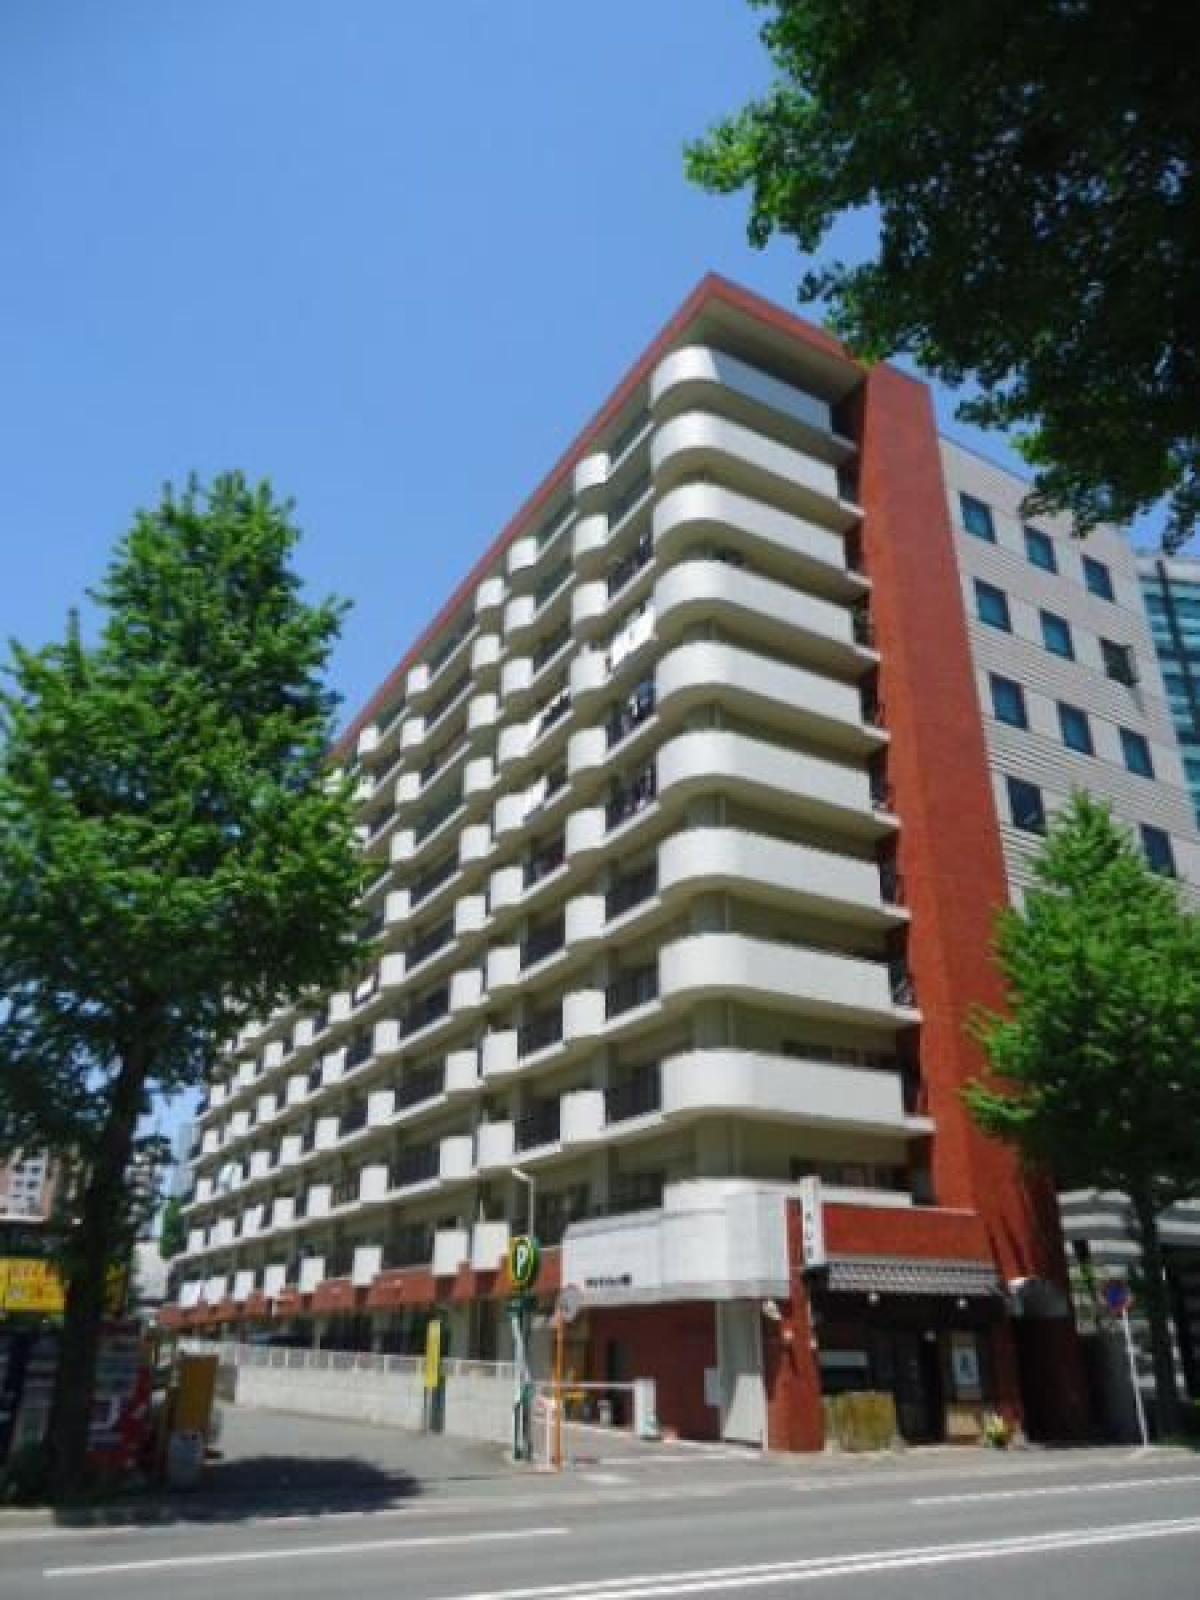 Picture of Apartment For Sale in Fukuoka Shi Hakata Ku, Fukuoka, Japan